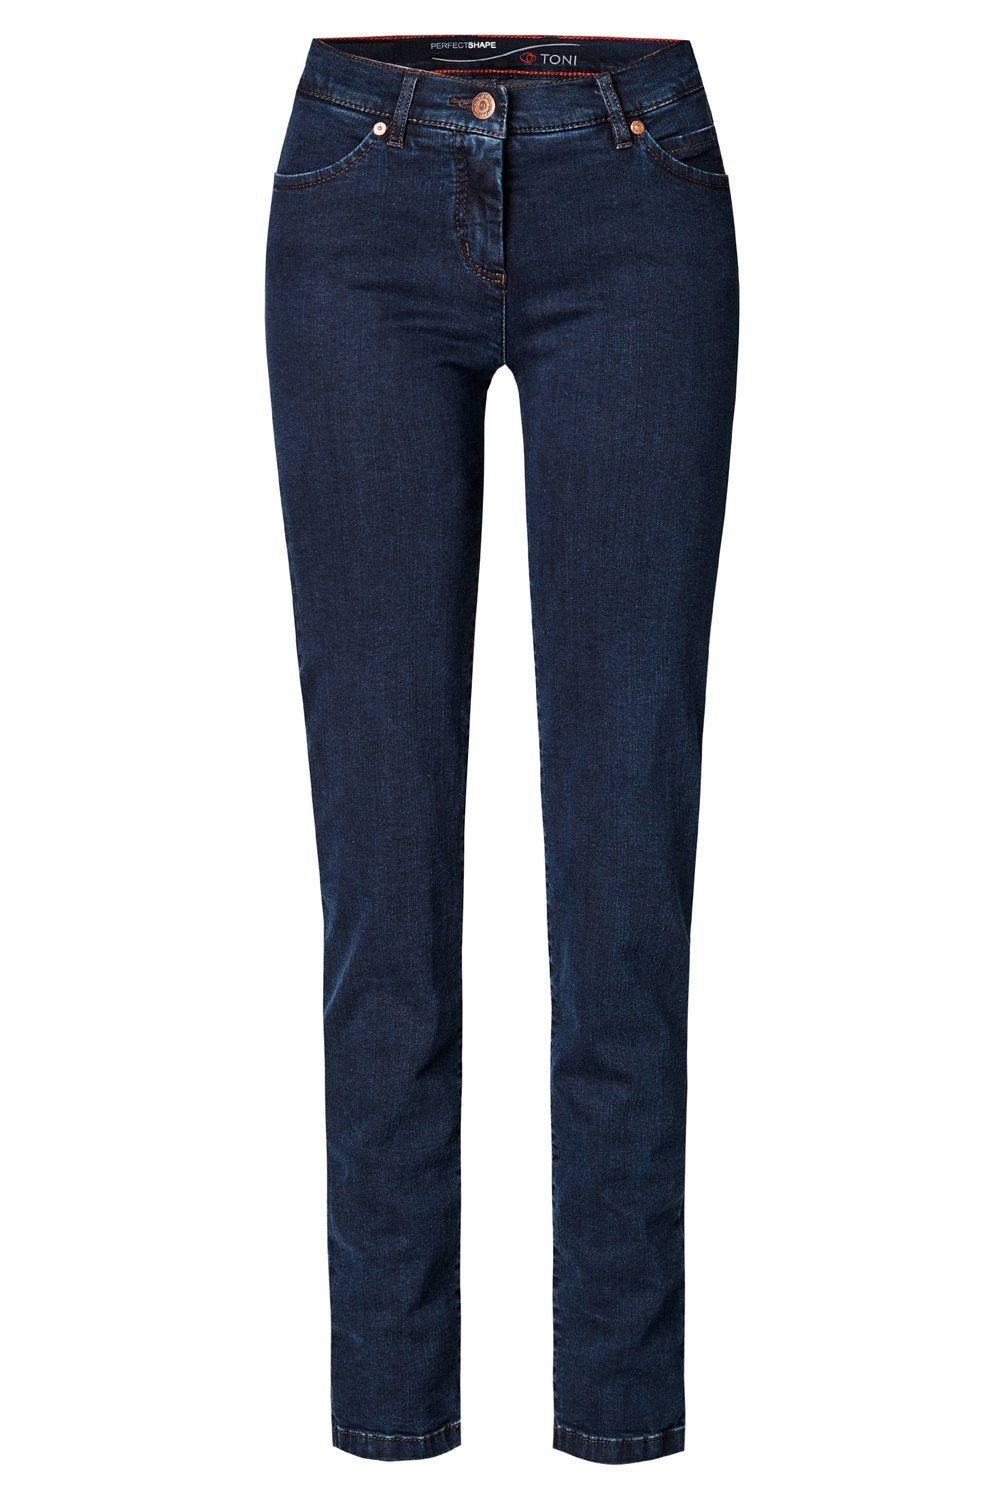 TONI 5-Pocket-Jeans dark blue | Jeans